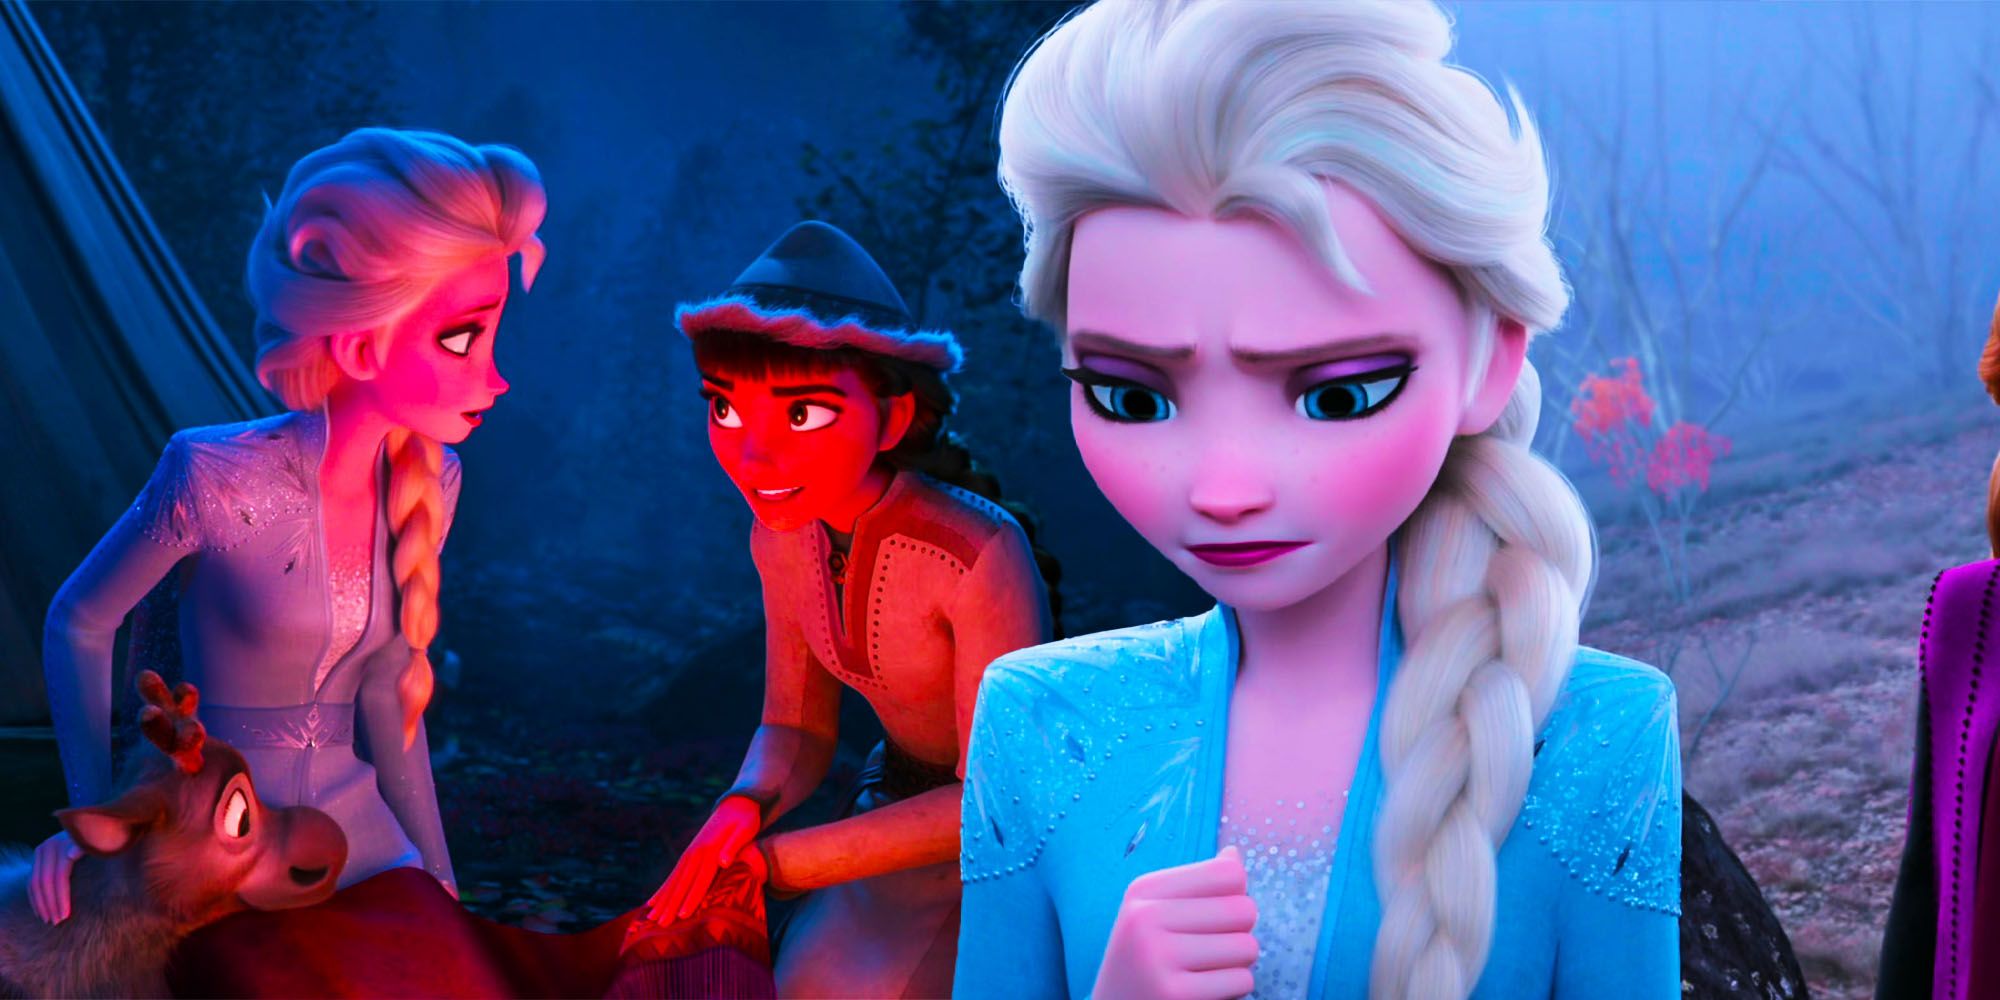 Frozen 3 Elsa should not have a girlfriend any romance